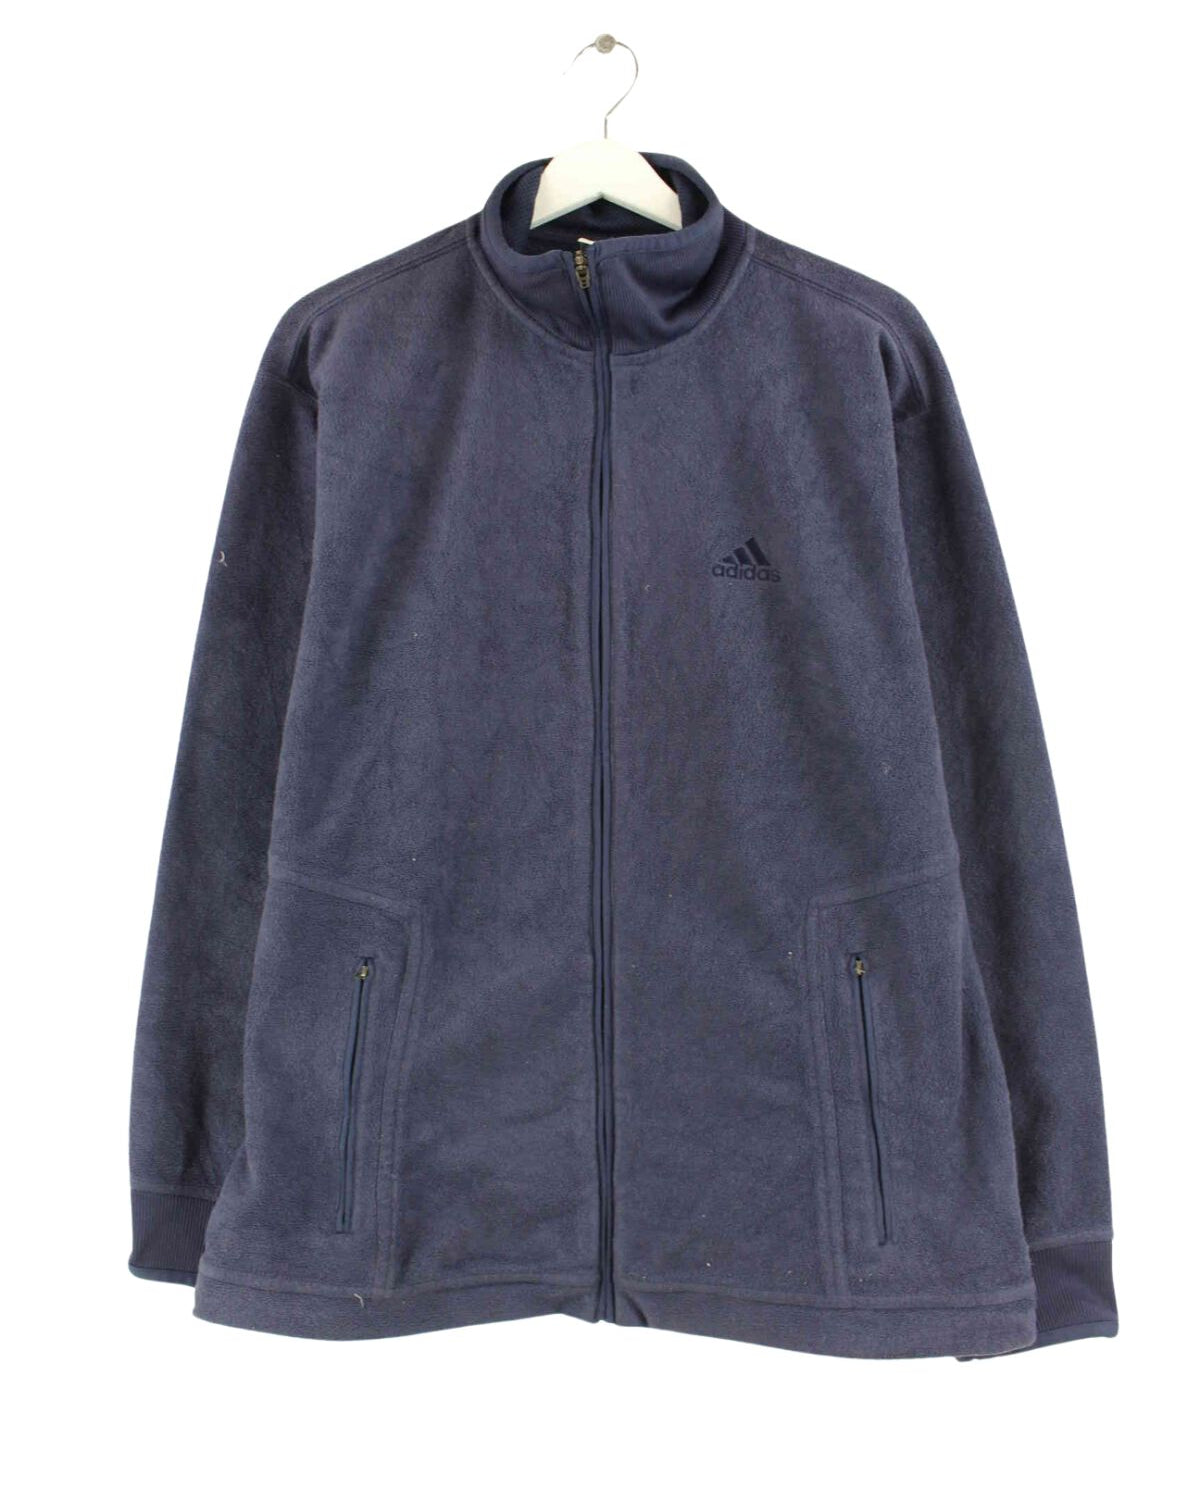 Adidas 90s Vintage Fleece Sweatjacke Blau L (front image)